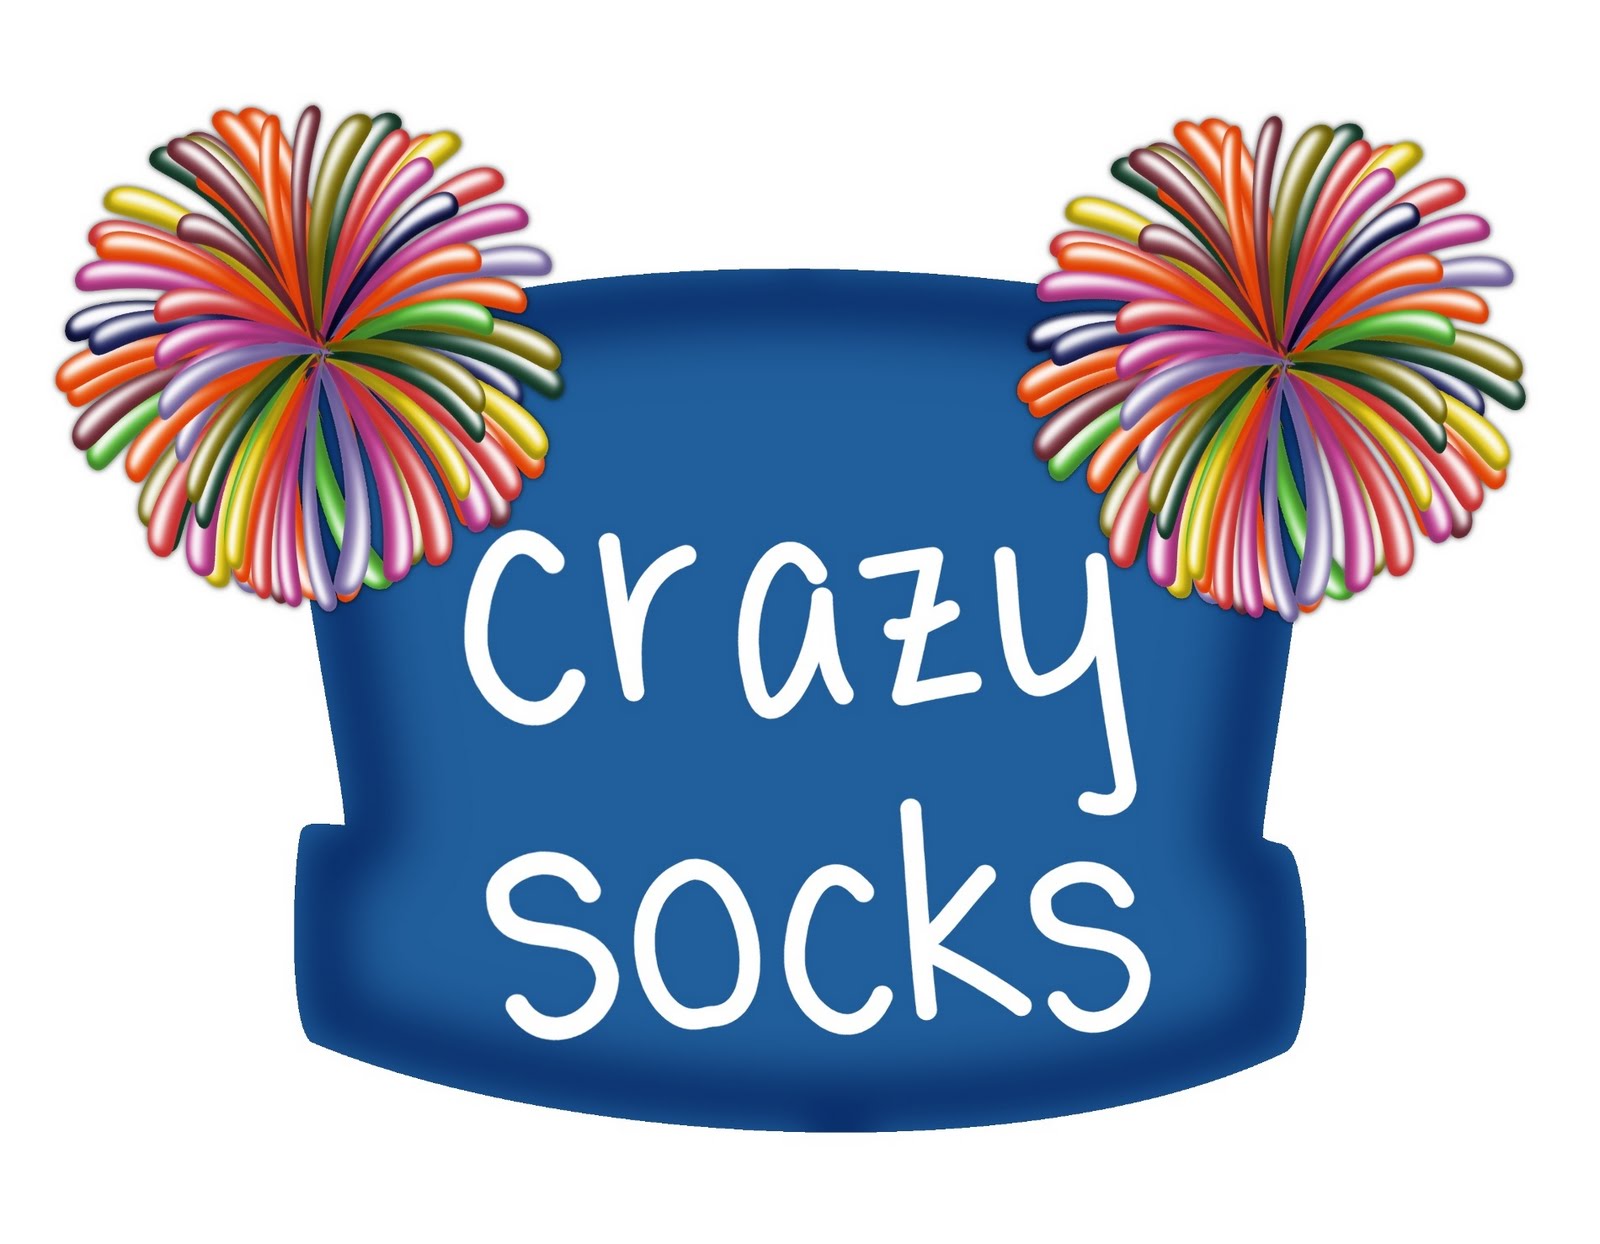 Sock and Crazy socks on Pinterest